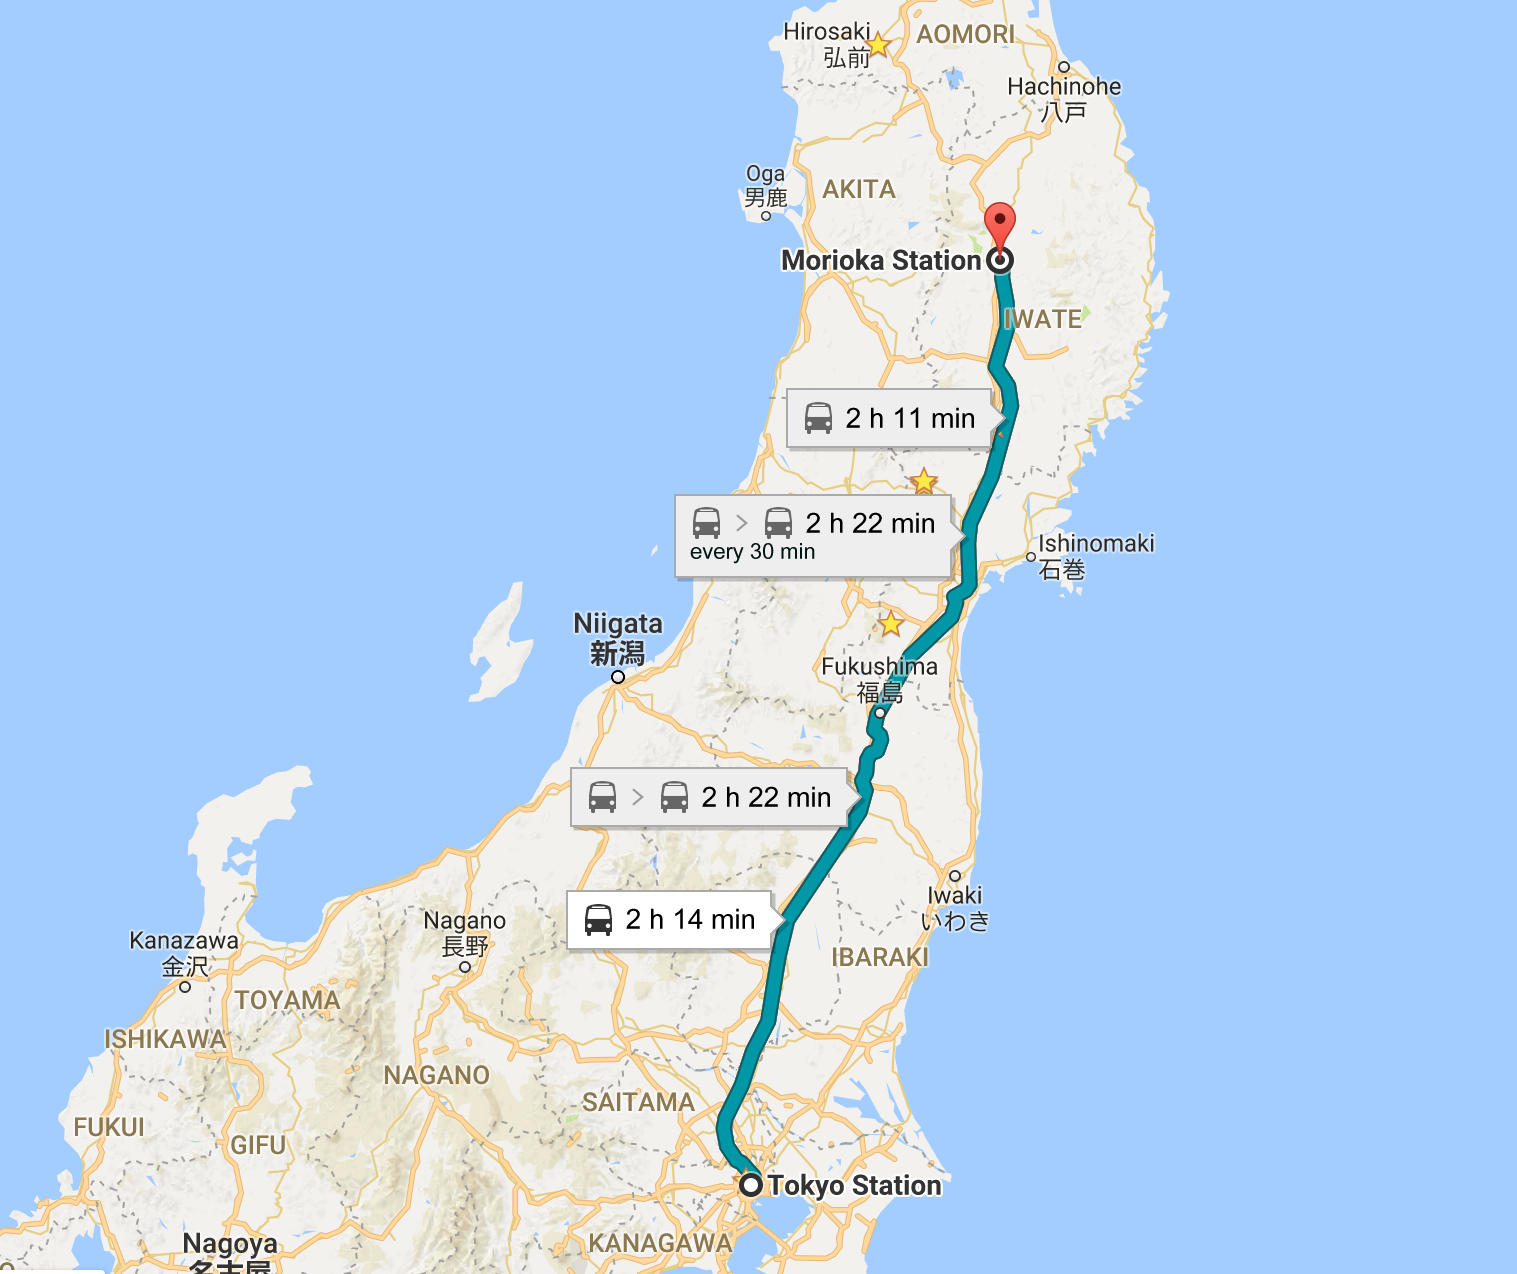 Japan : Tohoku 11 คนตะลุยขับรถเที่ยวฤดูใบไม้ผลิ ภาคโทโฮคุ,japantrips,ซากุระ,ทริป,โทโฮคุ,JR East-south Hokkaido,Kitakami,morioka,castle,familytrip,พาปันเที่ยว,hirosaki,park,sim,truemoveh,roaming,sim,travel,asia,ญี่ปุ่น,Koiwai,farm,hachimantai,one22family,review,tripizee,pocket,wifi,shizukuishi,prince,hotel,Afacetory